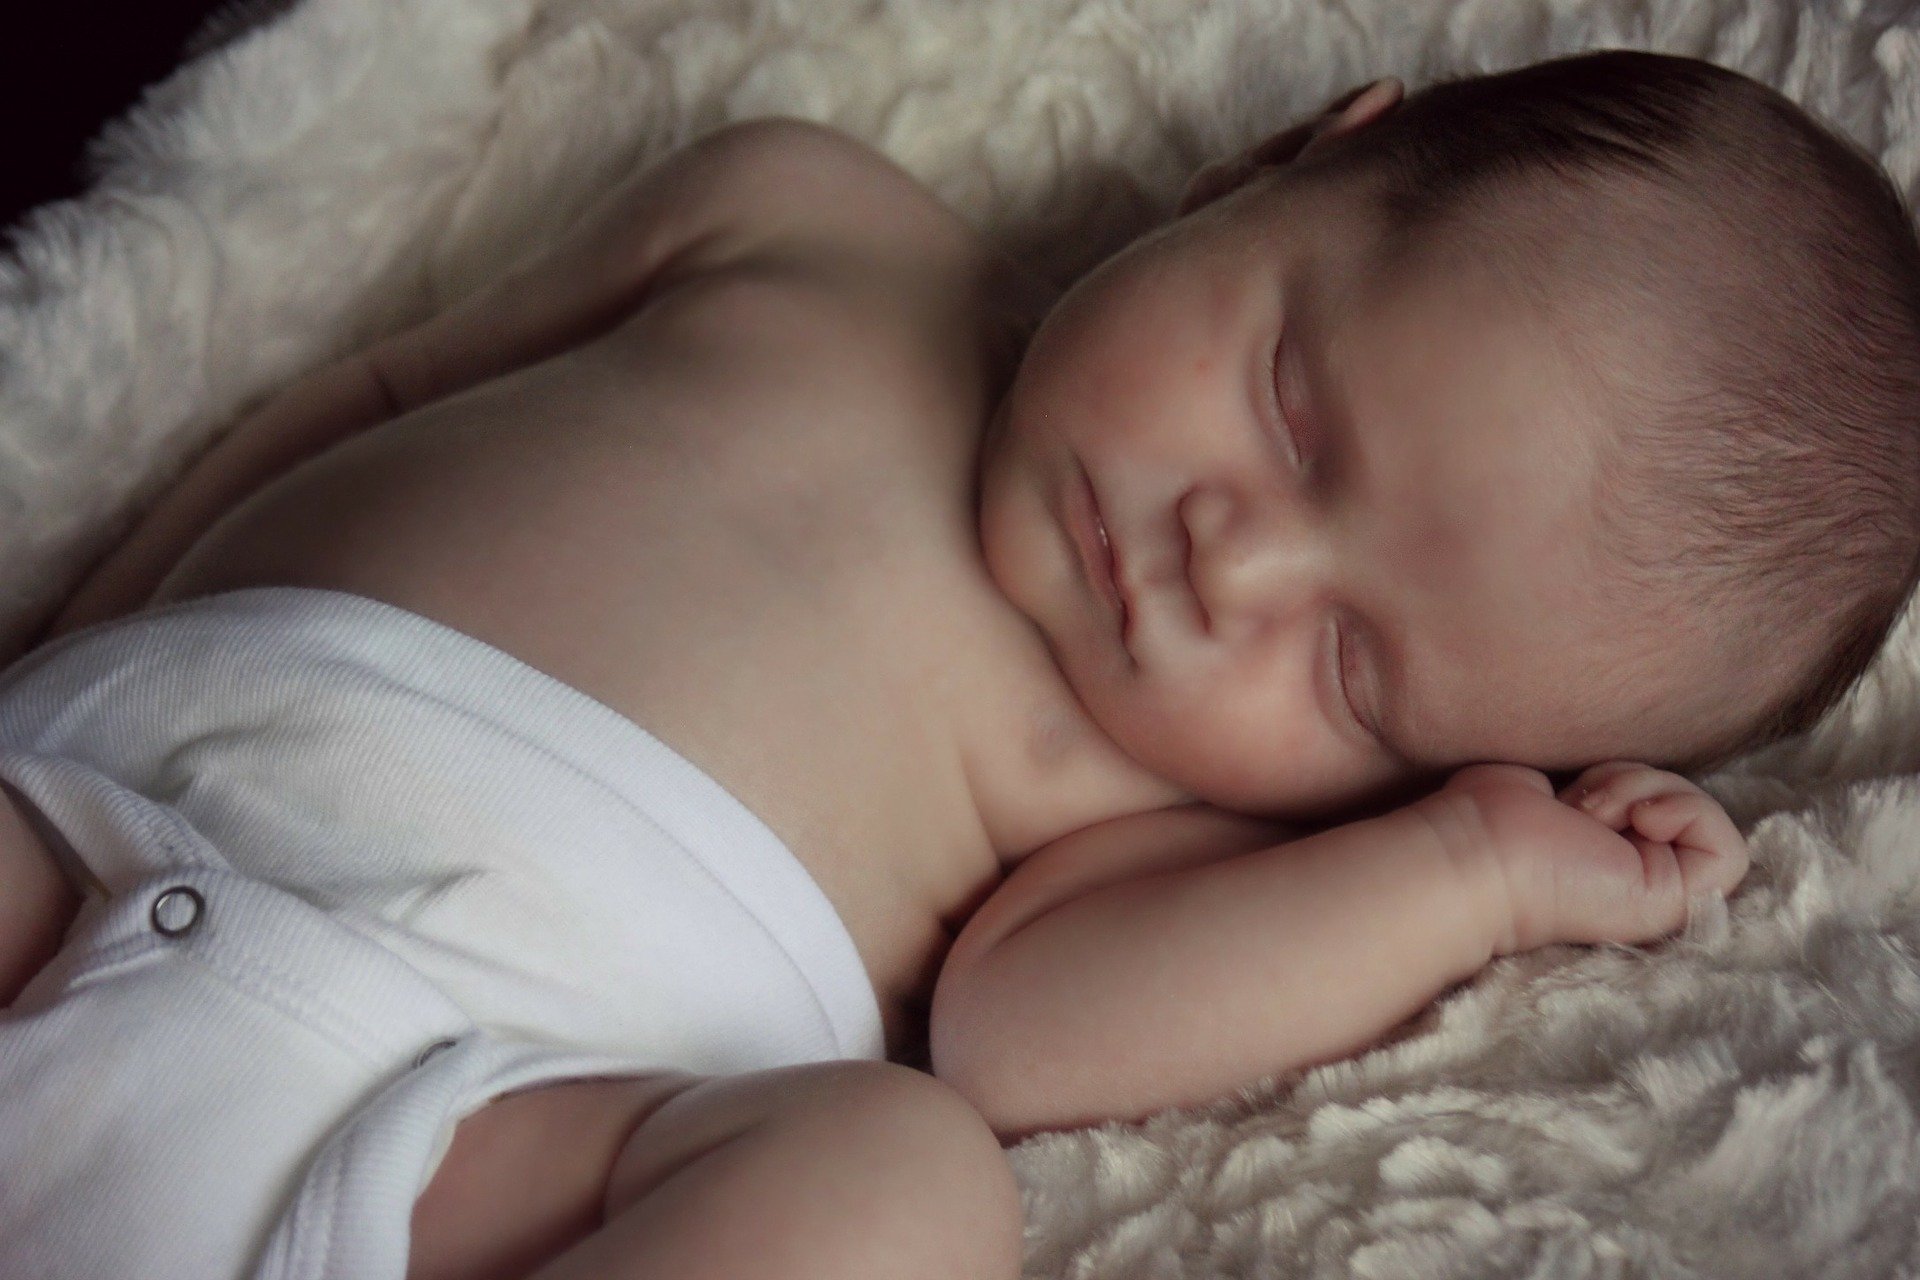 Newborn baby sleeping peacefully. | Source: Pixabay